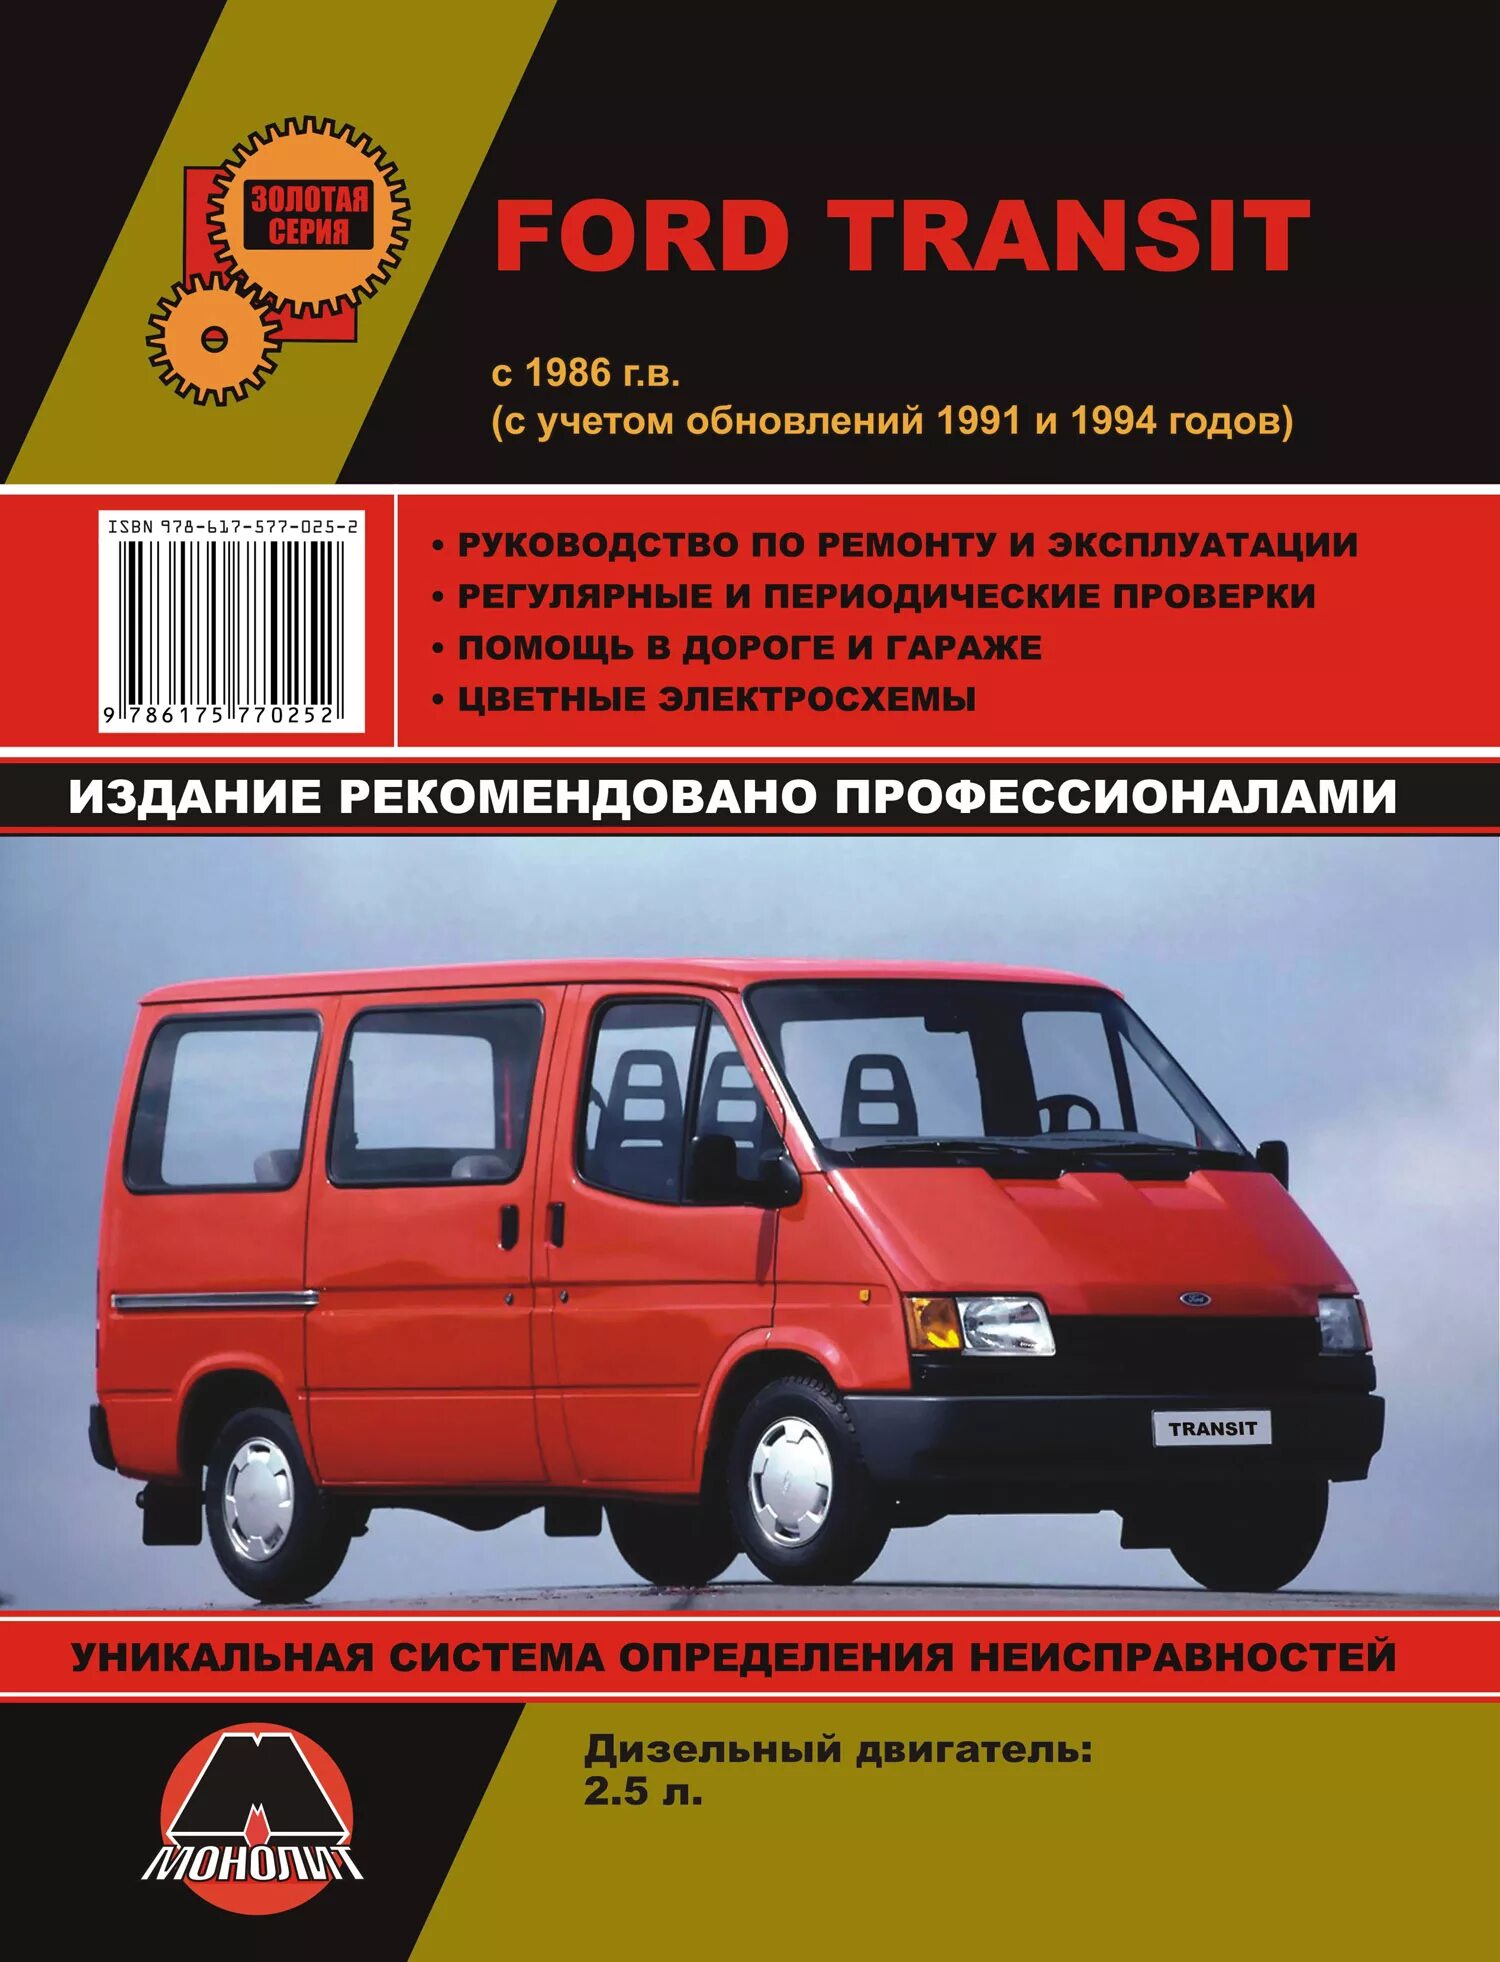 Форд транзит устройства. Ford Transit 1991-1994 мануал. Ford 2.5 Transit дизель 1986. Автолитература Форд Транзит 2006. Форд Транзит 1986-1991.